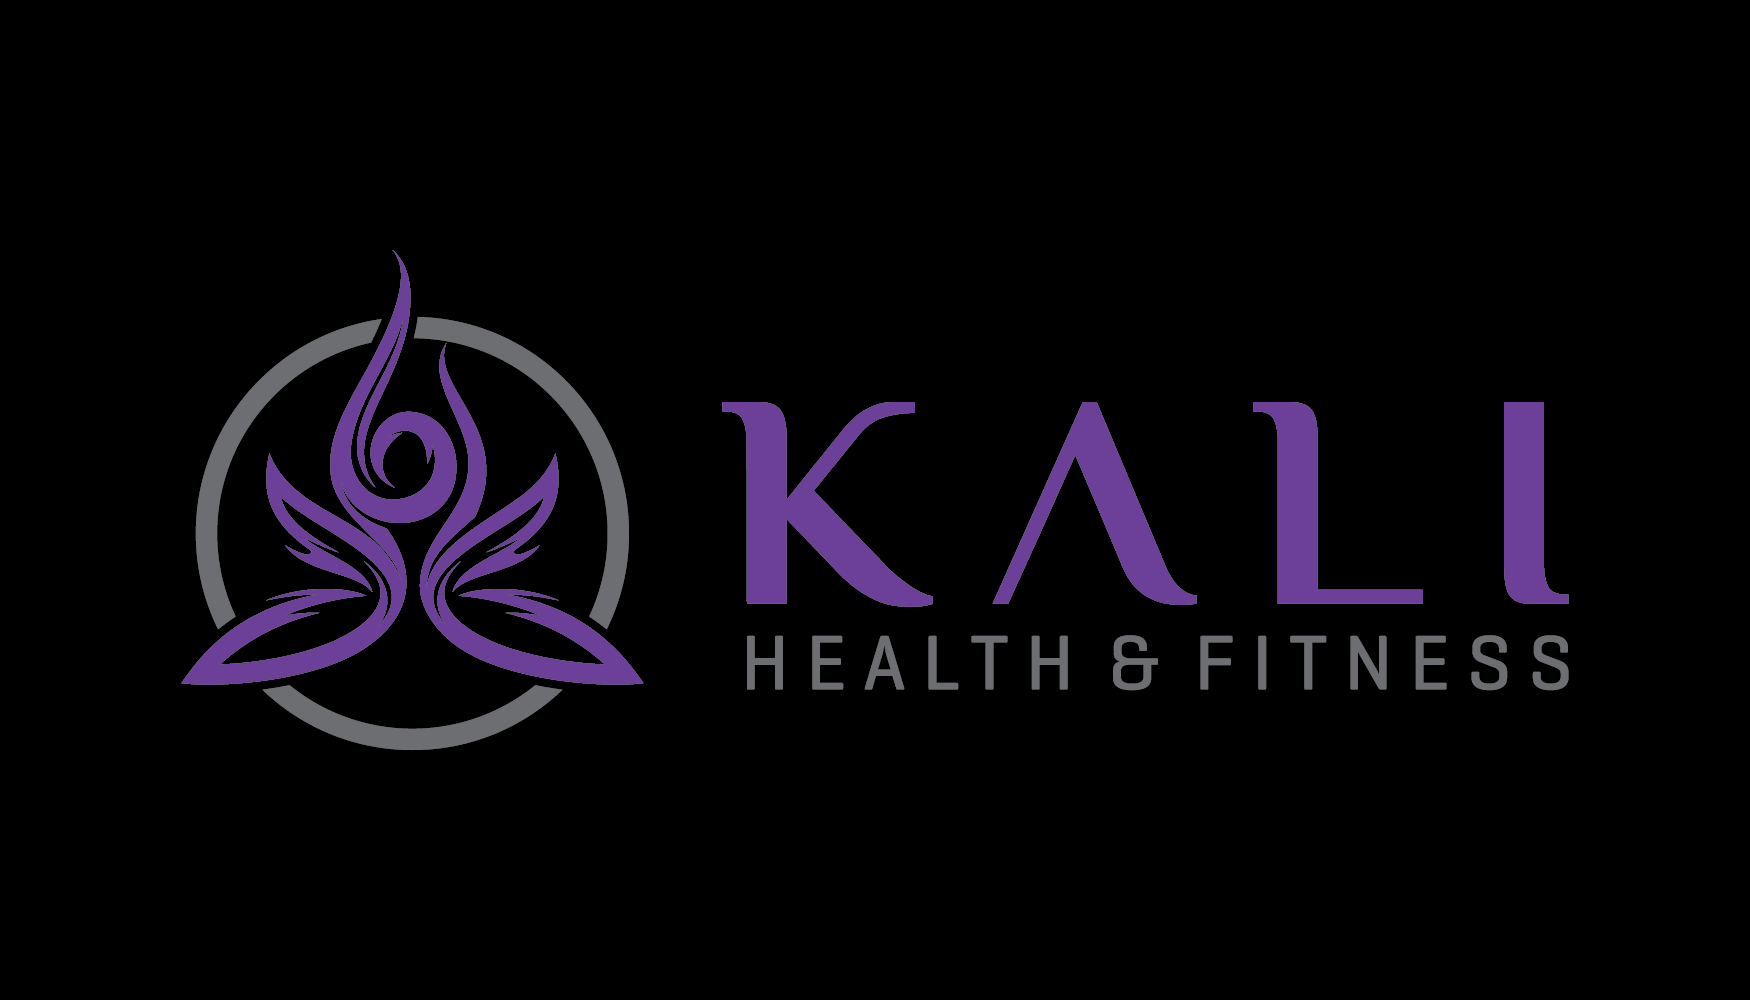 Kali Health & Fitness